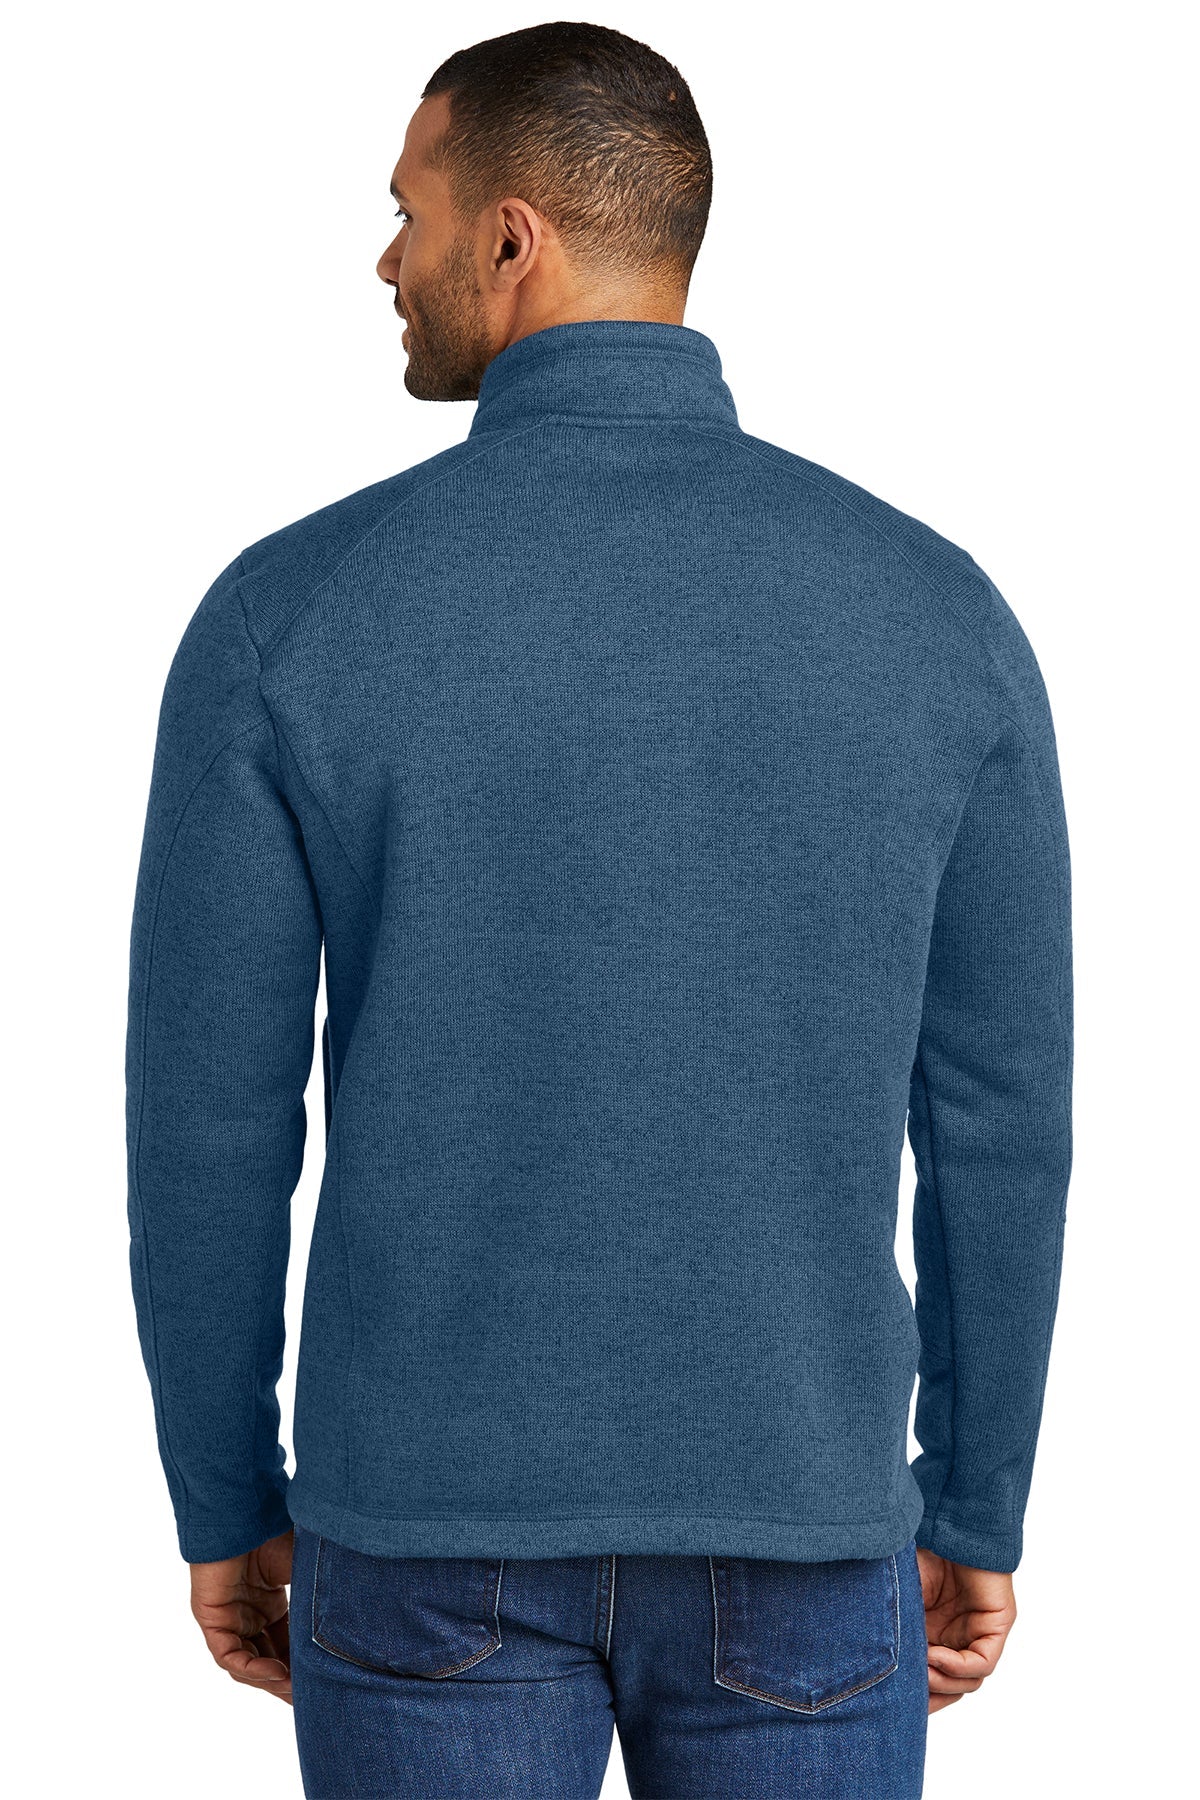 Port Authority Arc Sweater Fleece Custom 1/4-Zips, Insignia Blue Heather